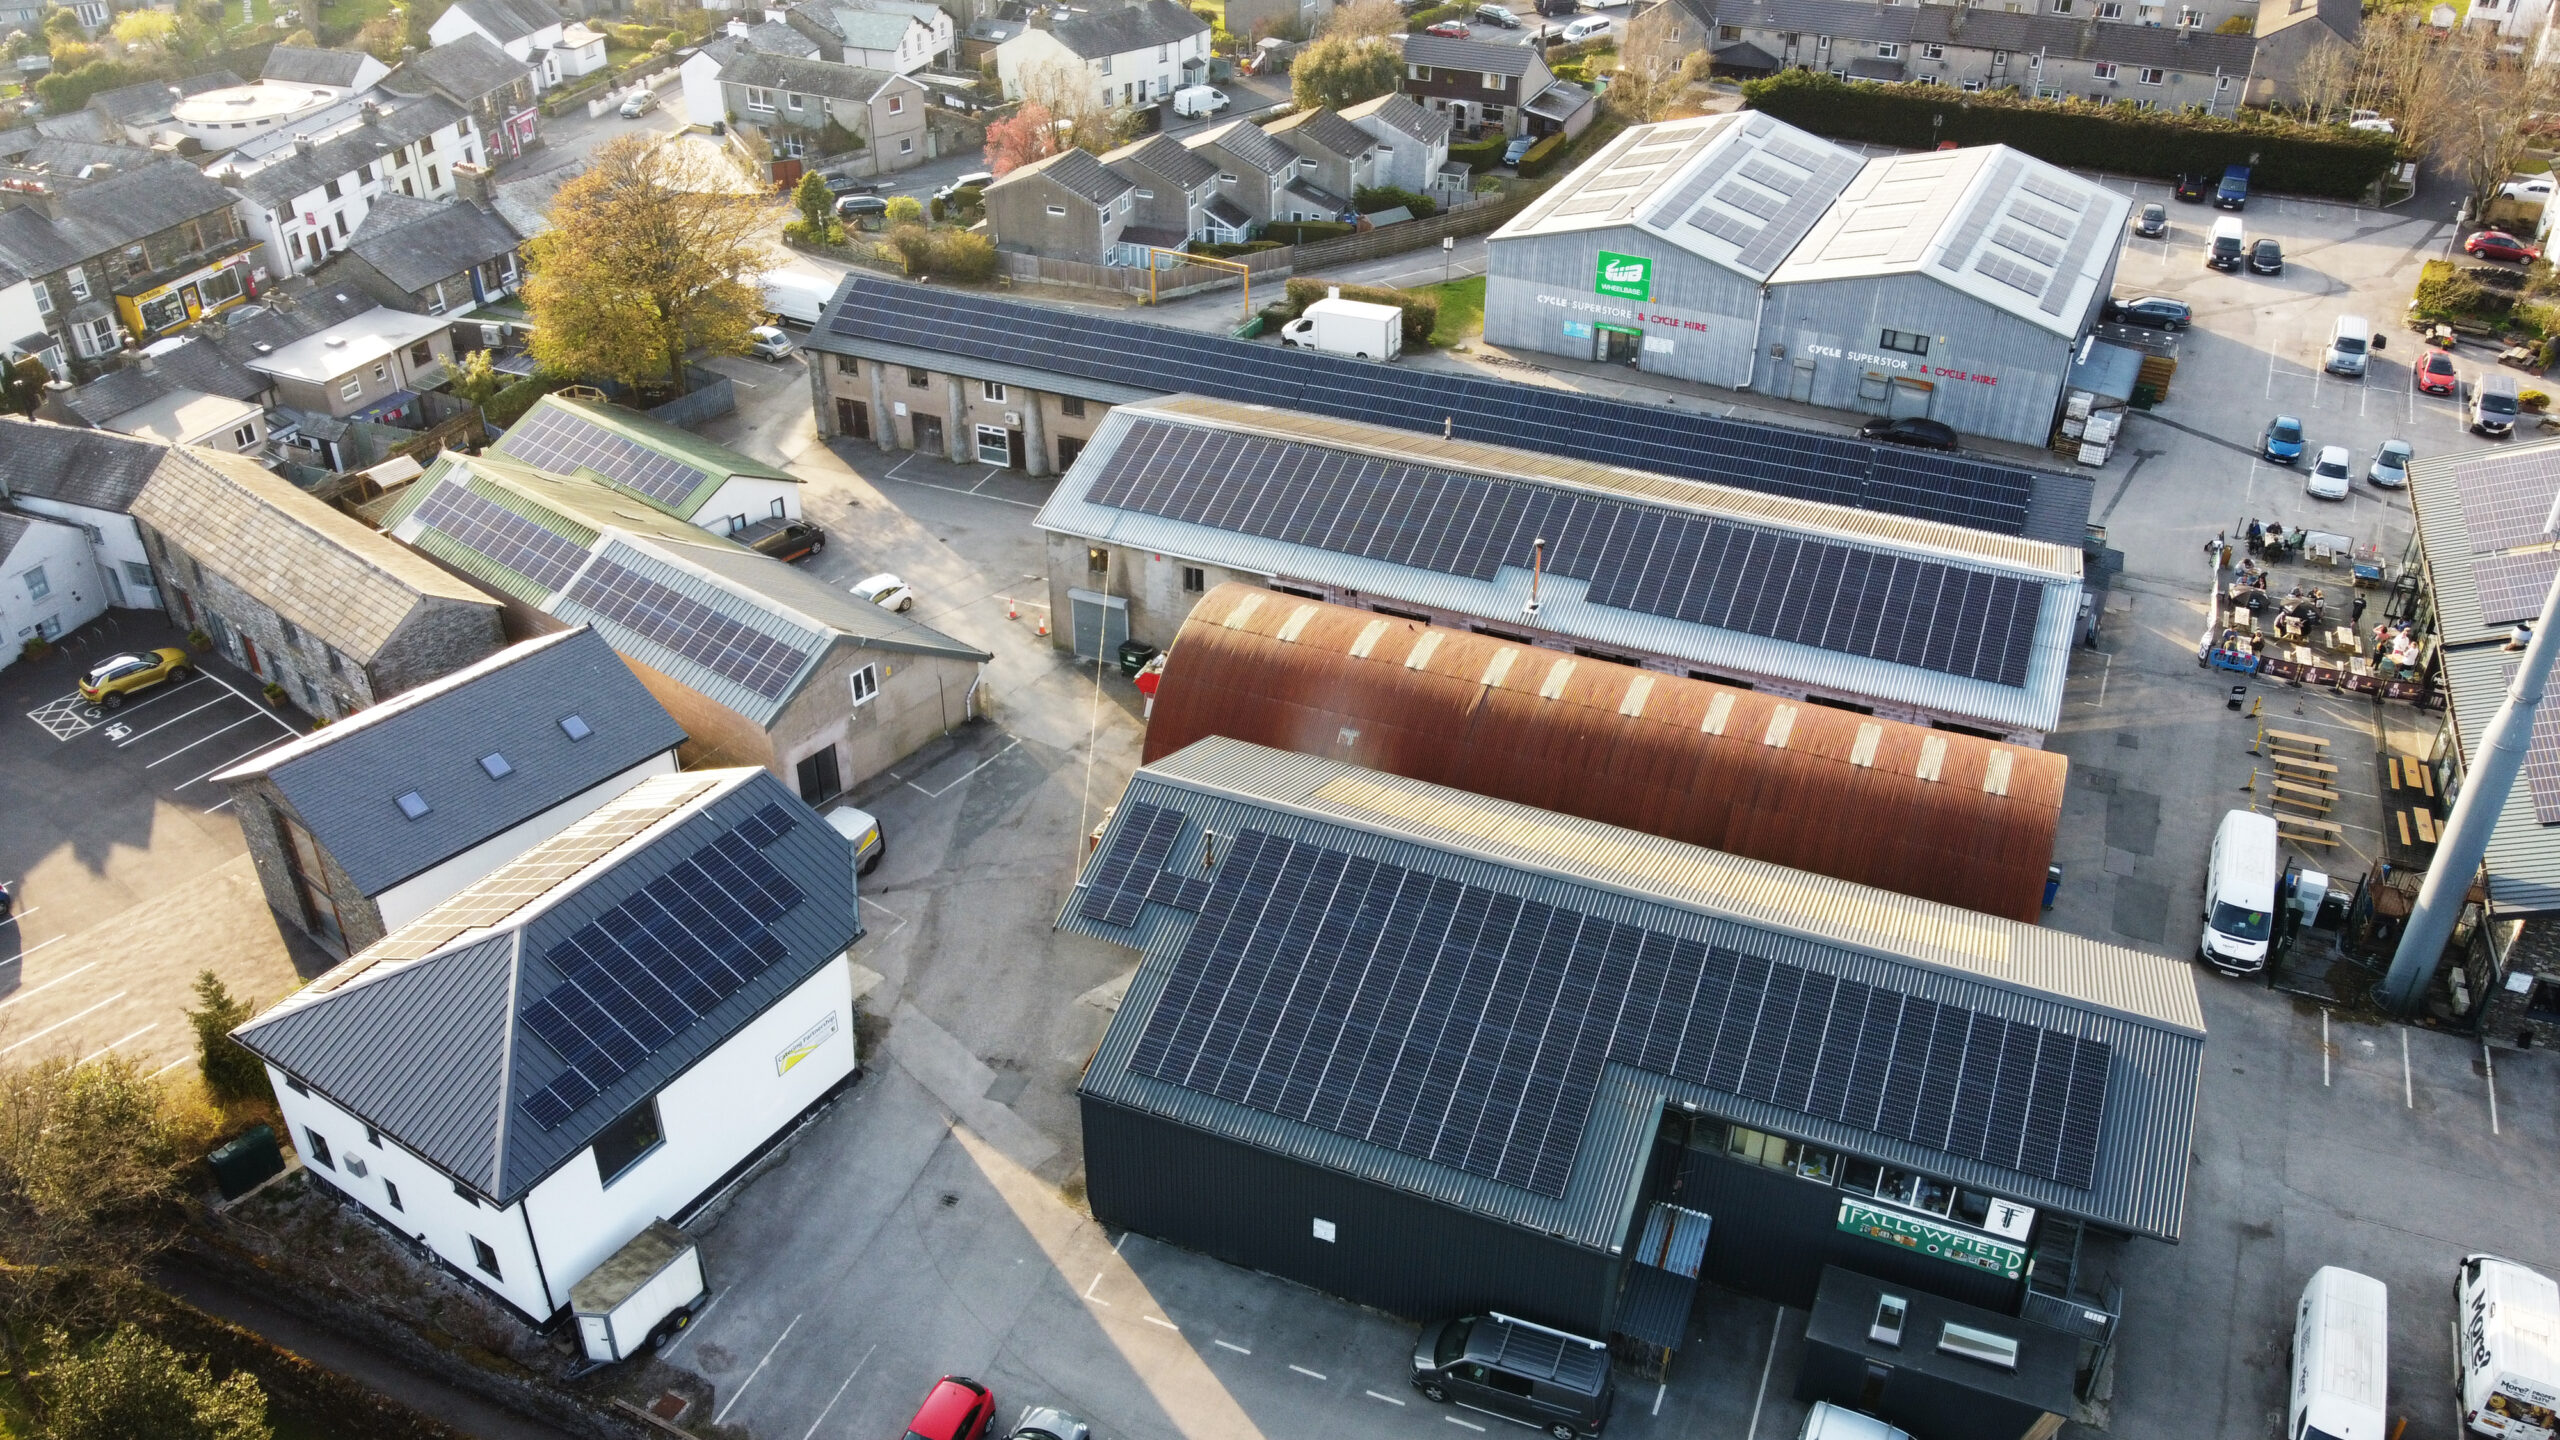 Staveley Mill Yard Solar Panels